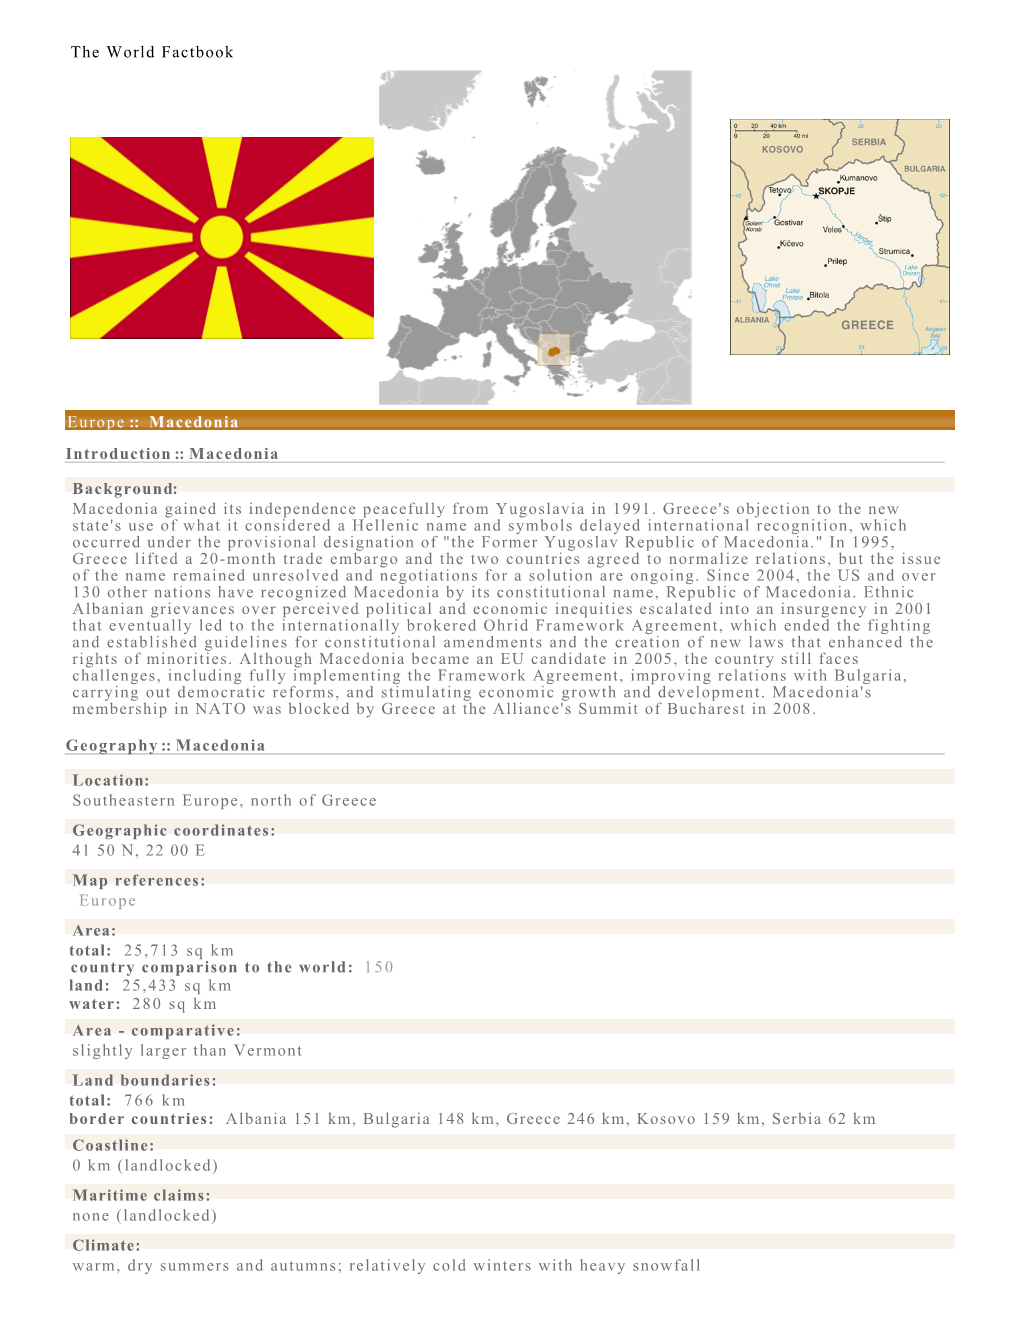 The World Factbook Europe :: Macedonia Introduction